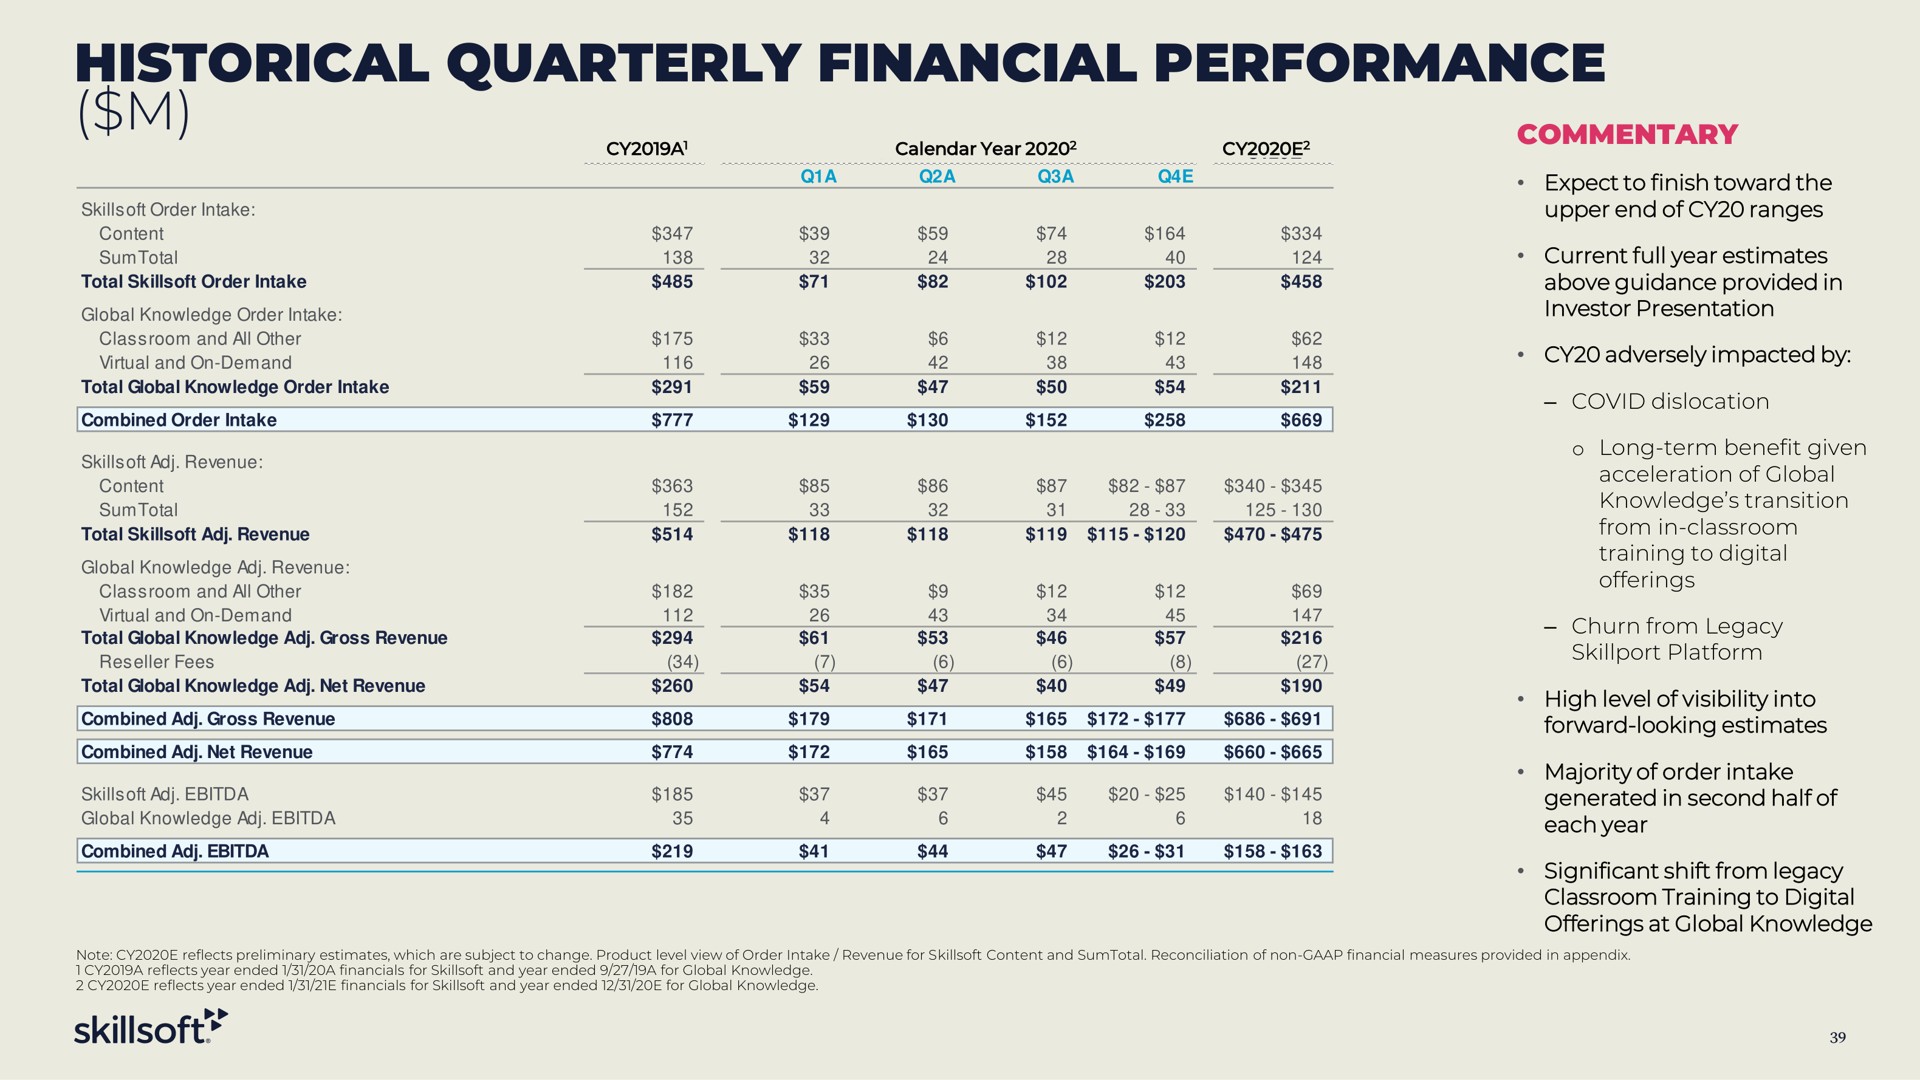 historical quarterly financial performance calendar year comet ary | Skillsoft